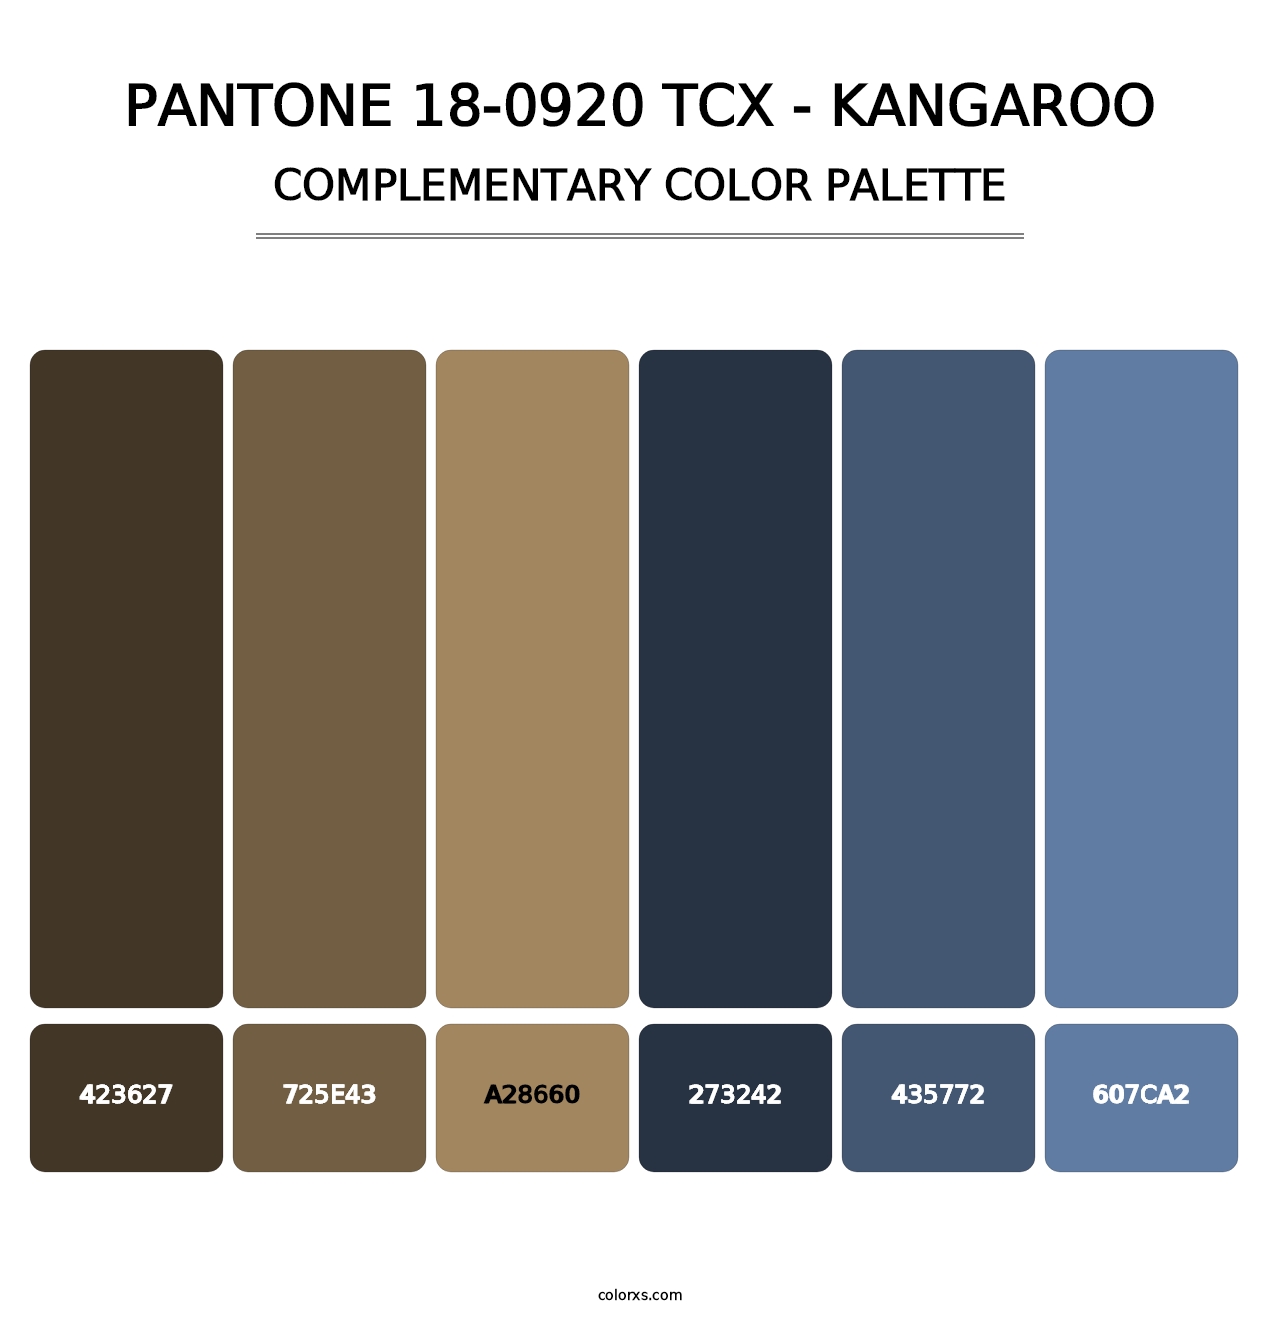 PANTONE 18-0920 TCX - Kangaroo - Complementary Color Palette